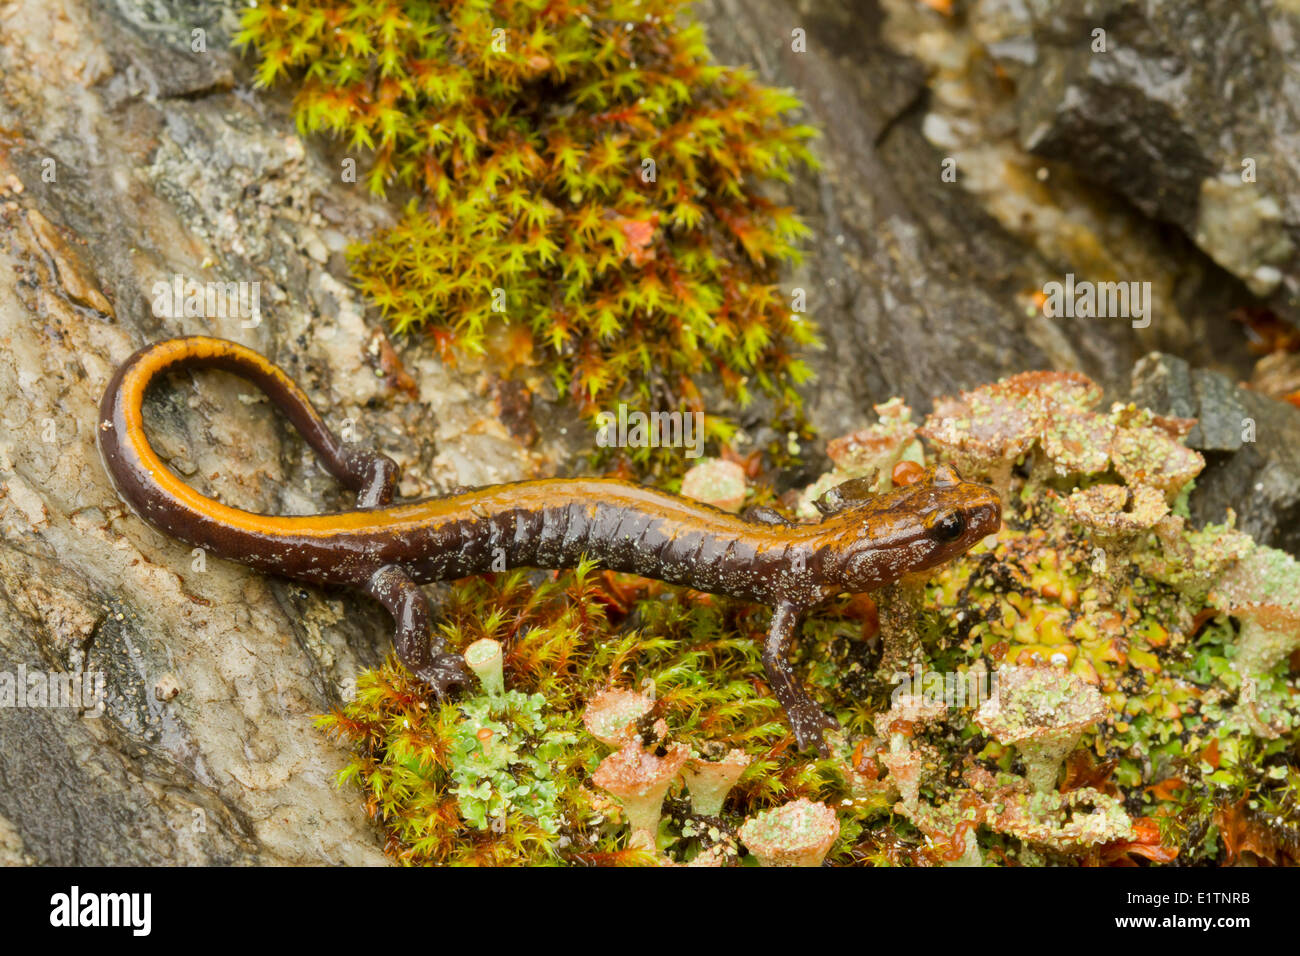 Couer D'alene Salamander, Plethodon idahoensis, Revelstoke, BC, Canada Stock Photo